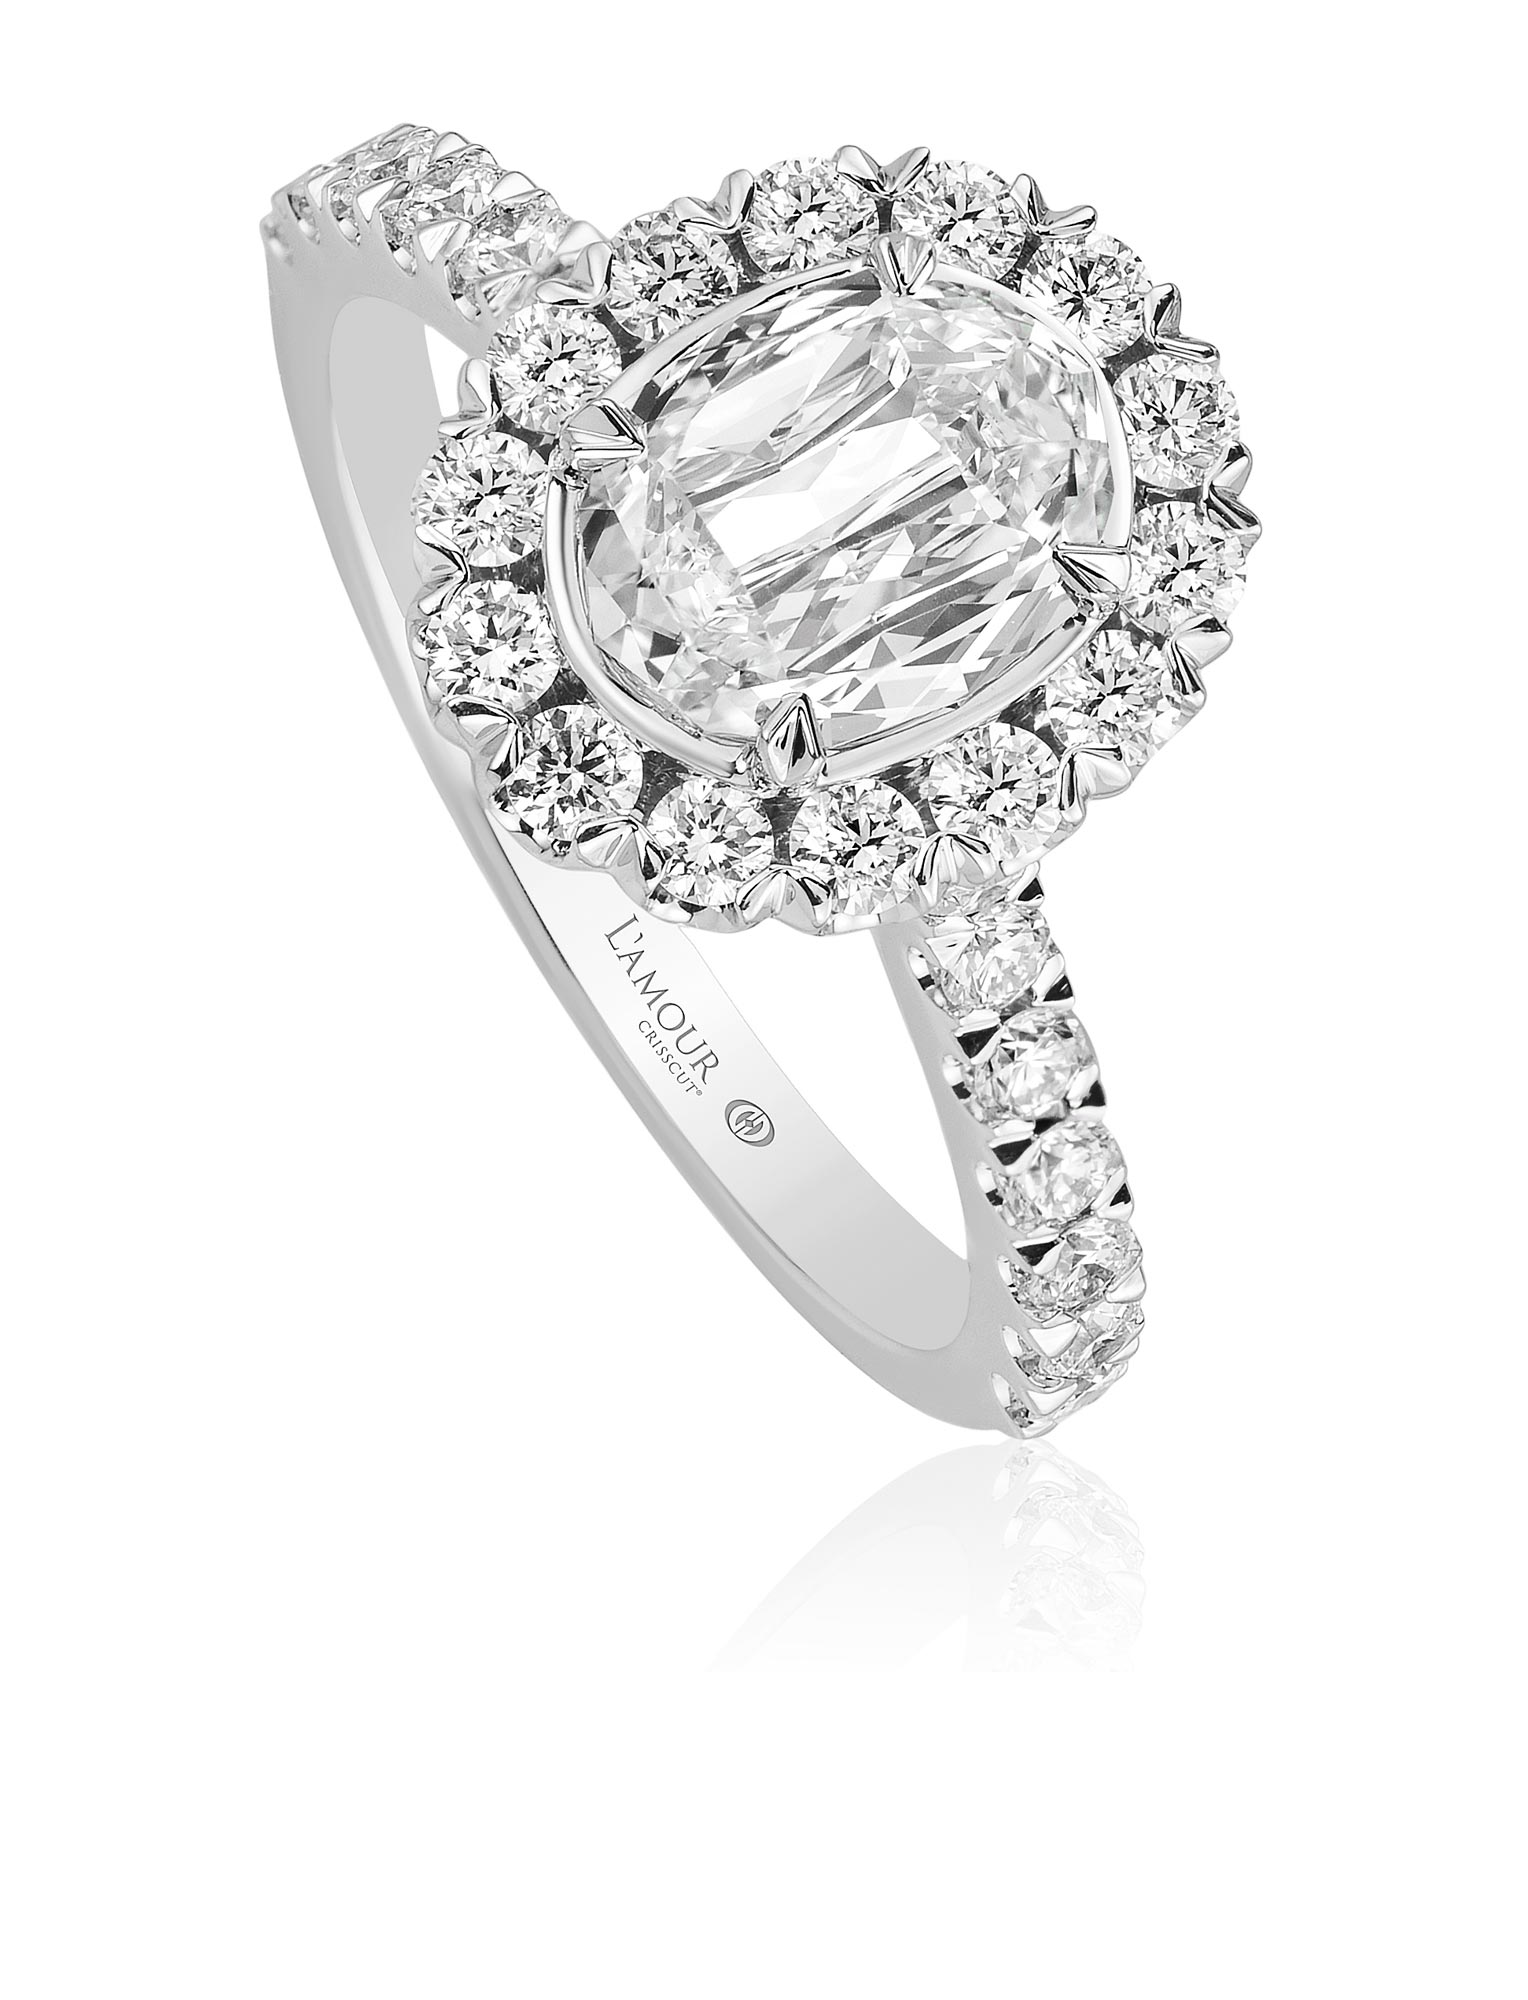 LOU IS VUI TTON Designer Rings Love Designer Ring Engagement Rings For  Women 925 Sterling Silver Mens Gold Diamond B1 From Buli666, $8.04